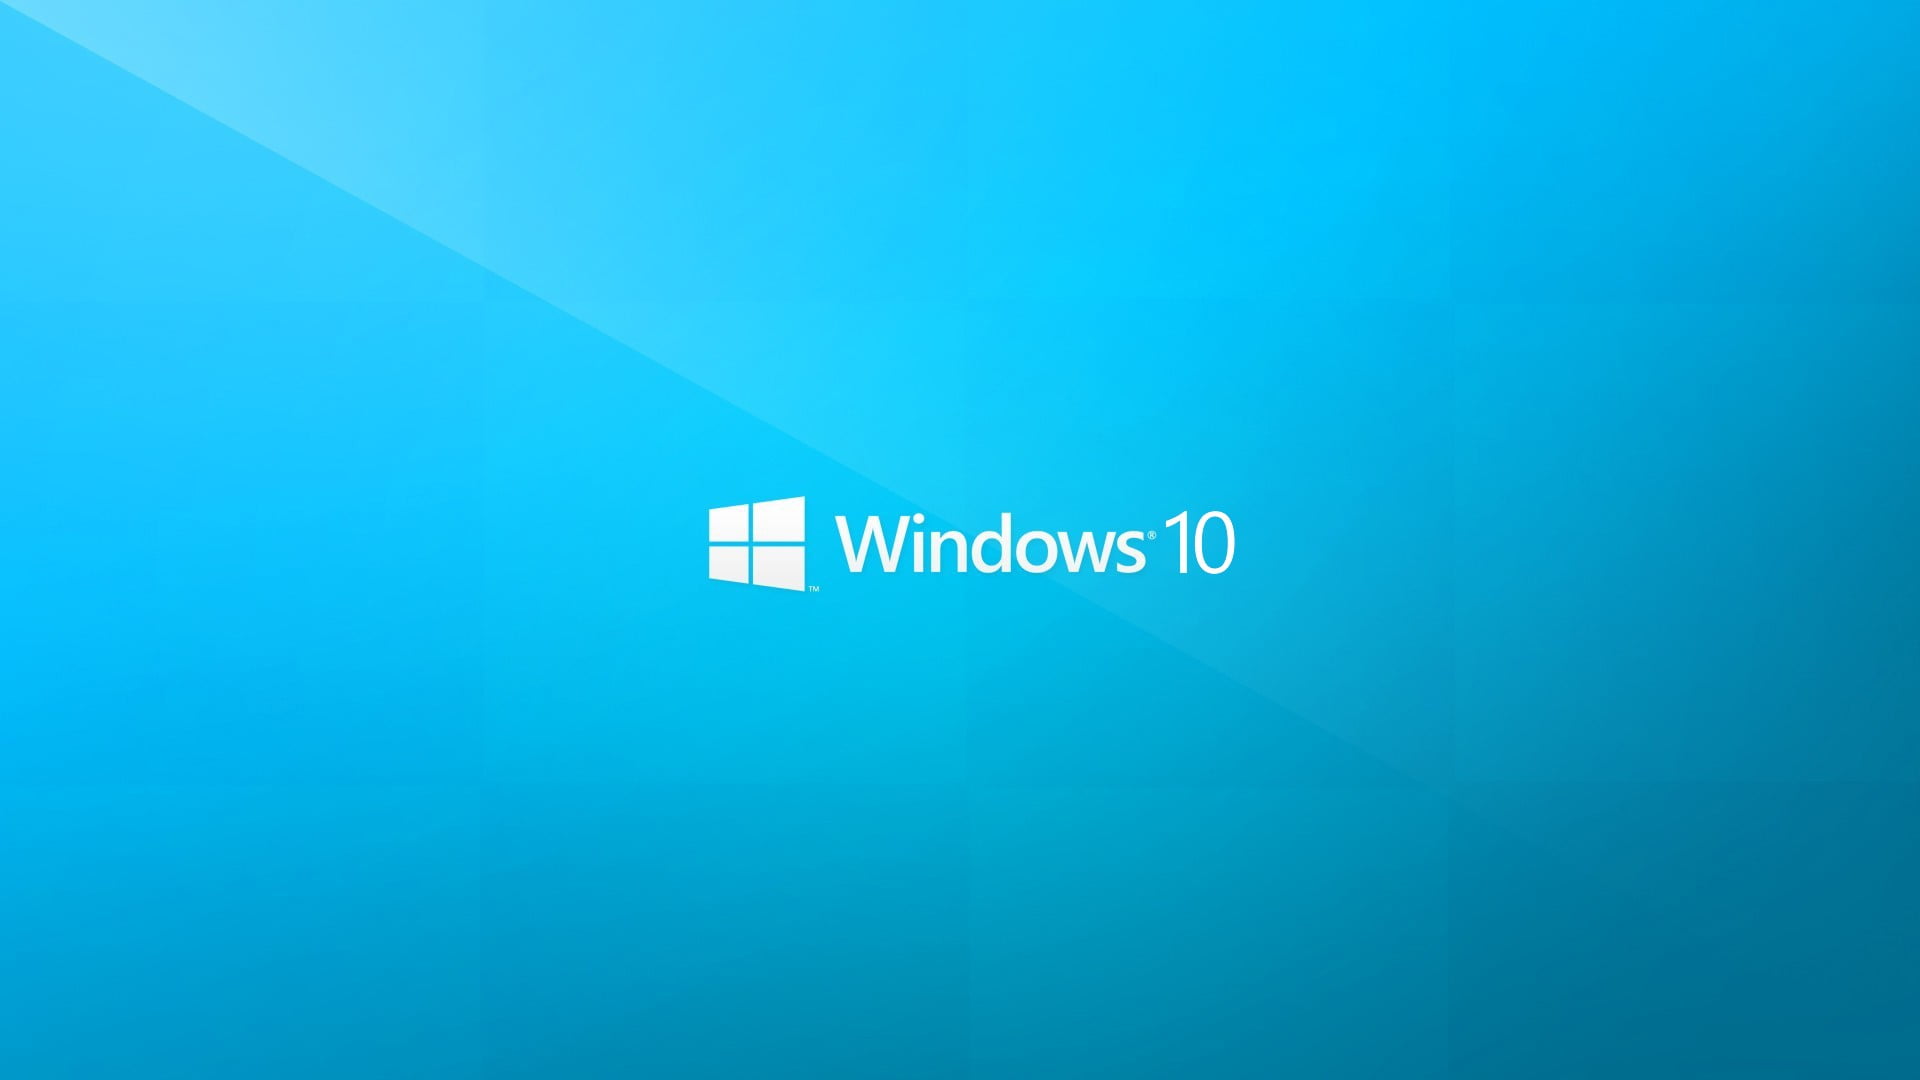 Windows 10 Logo Windows 10 Window Minimalism Logo Hd Wallpaper